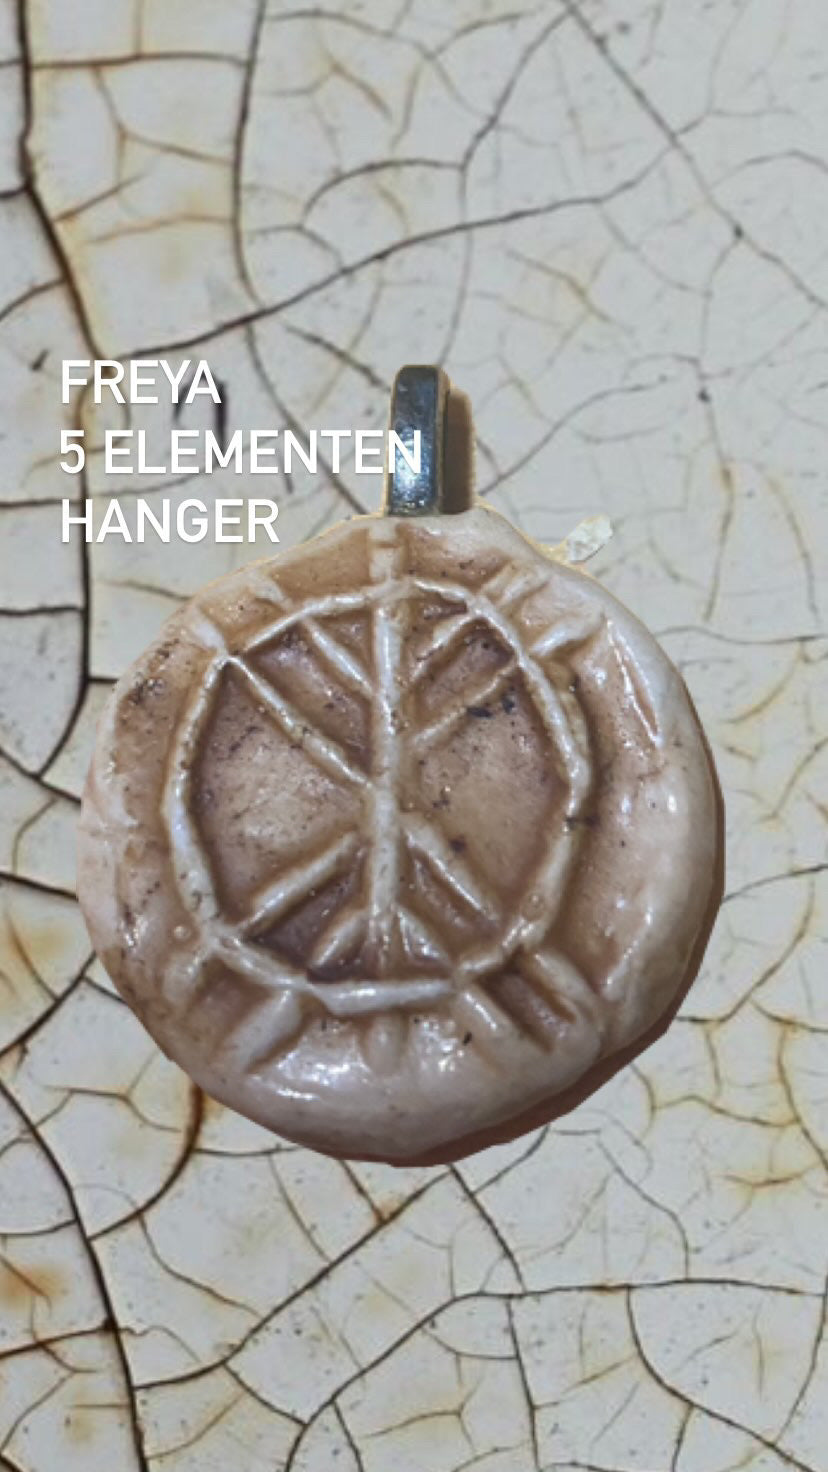 Freya Hanger